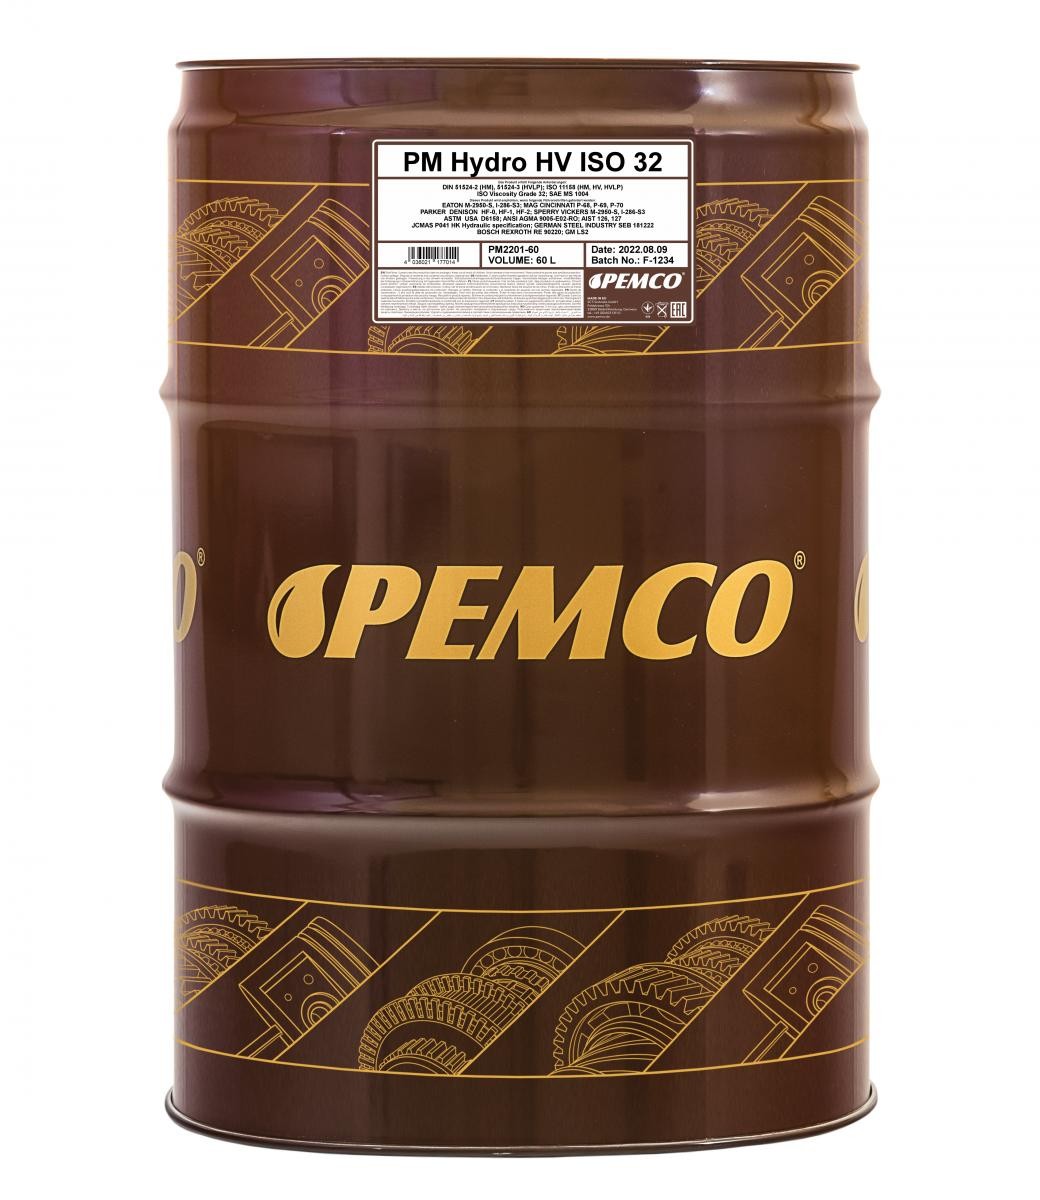 PEMCO Hydro HV Capacity: 60l Hydraulic fluid PM2201-60 buy